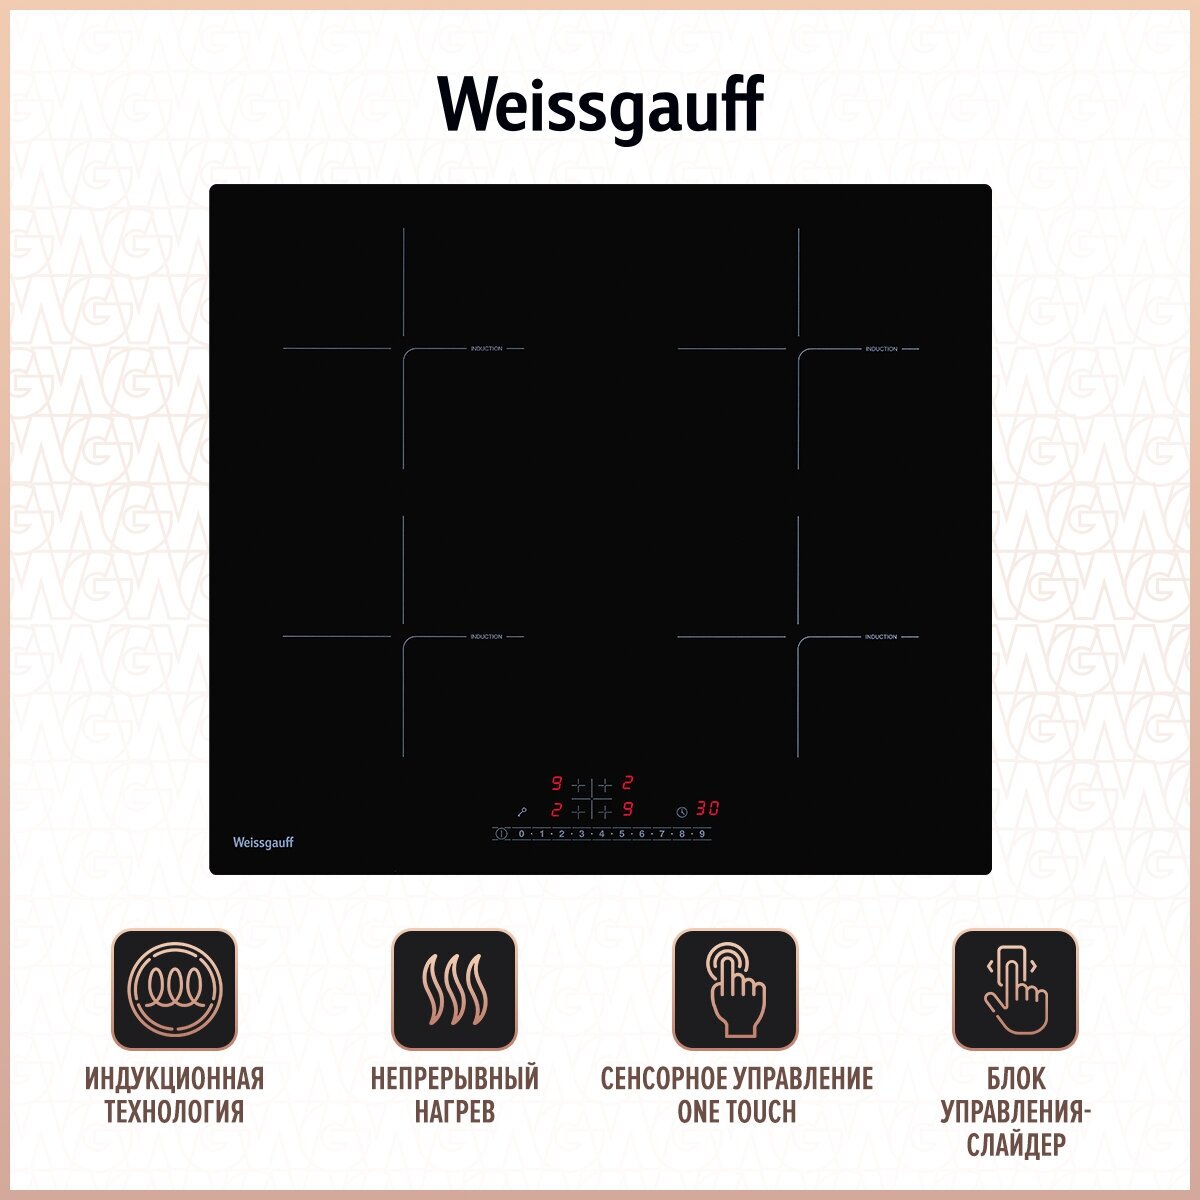    Weissgauff HI 640 BSC